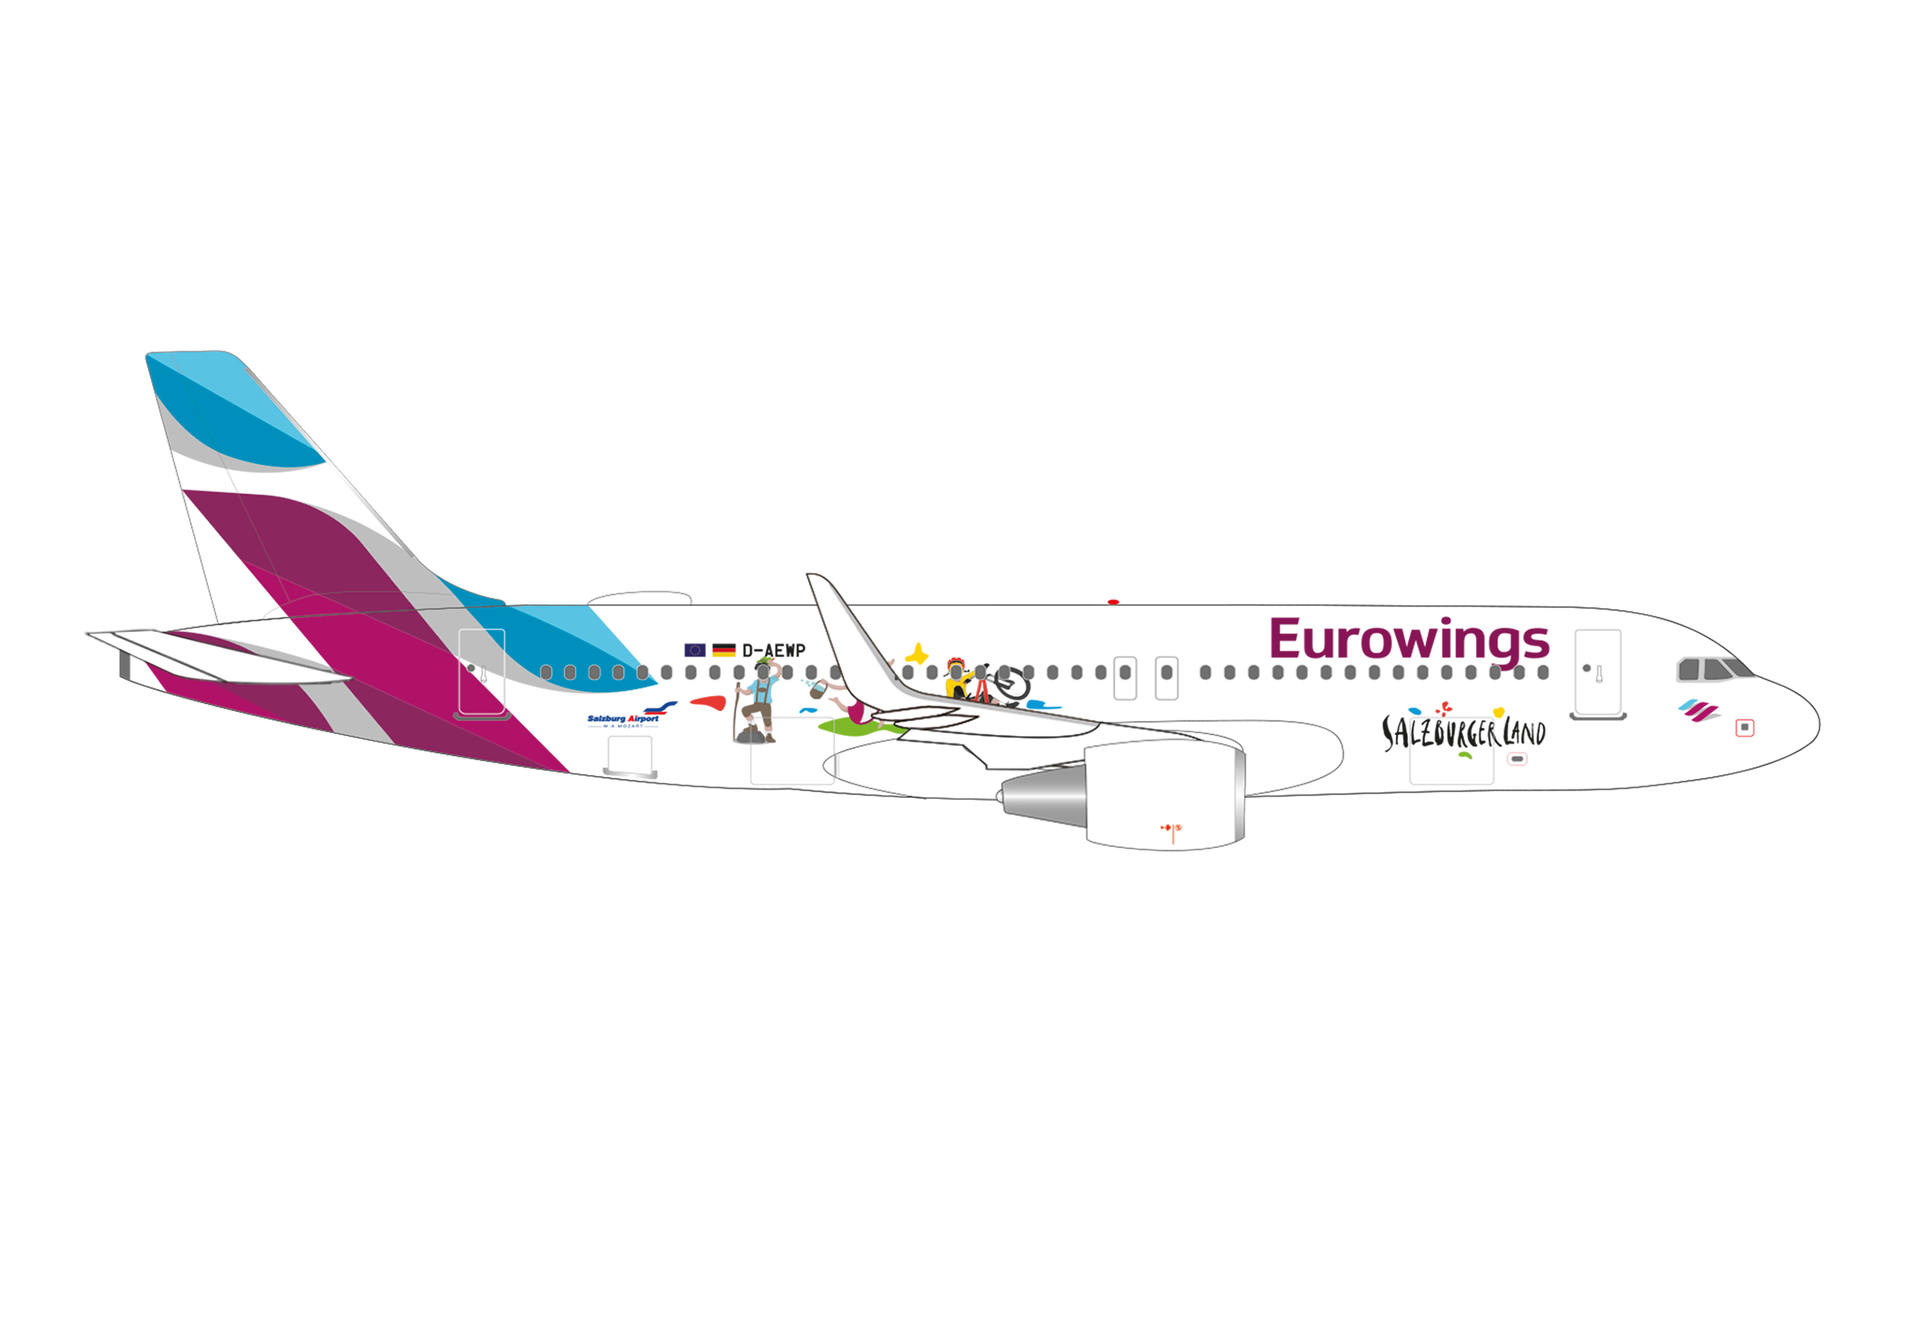 Eurowings Airbus A320 “Salzburger Land” – D-AEWP